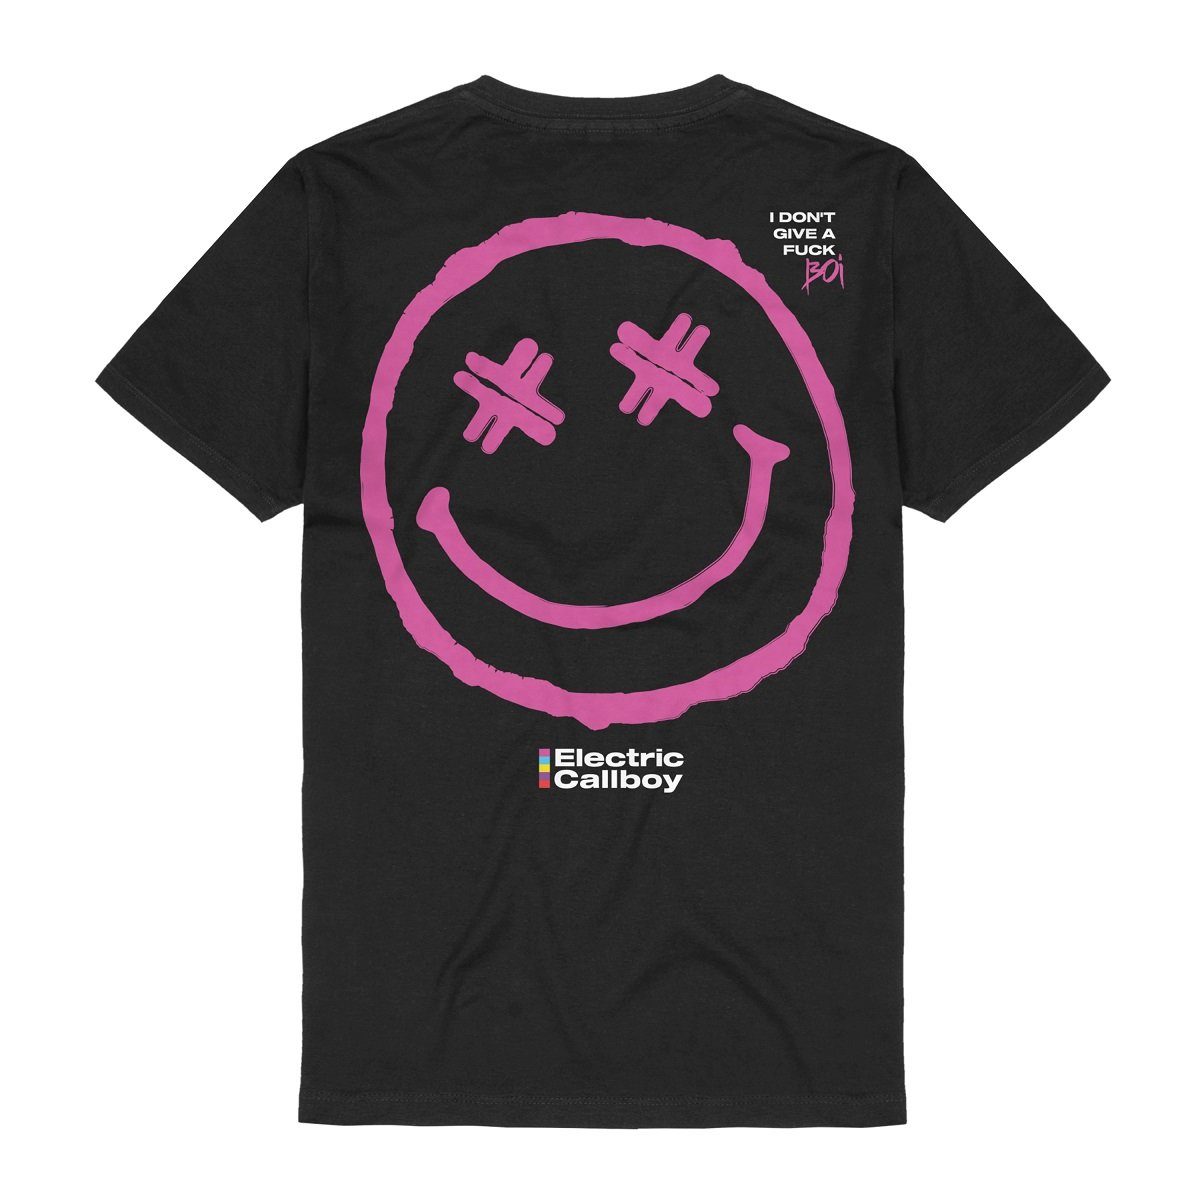 Fuckboi Smile Callboy T-Shirt Electric